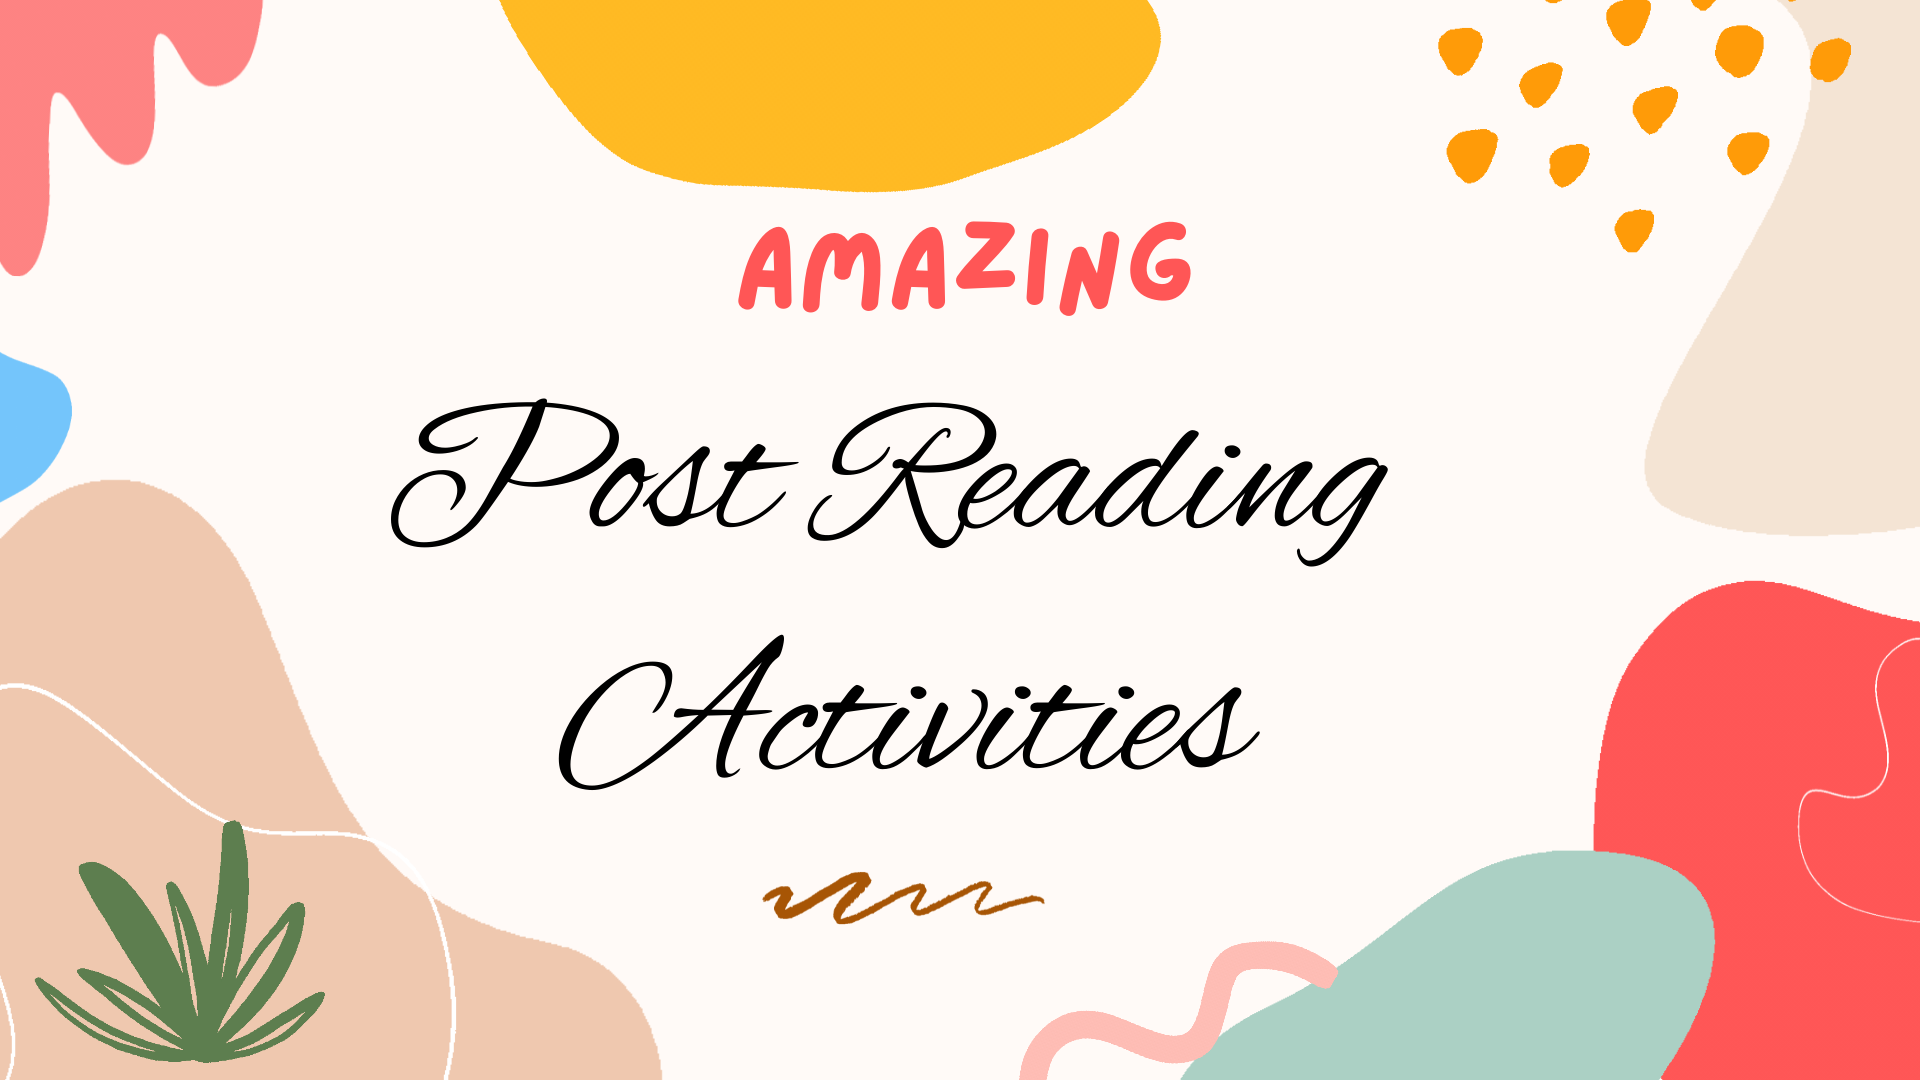 Post reading activities that children will love